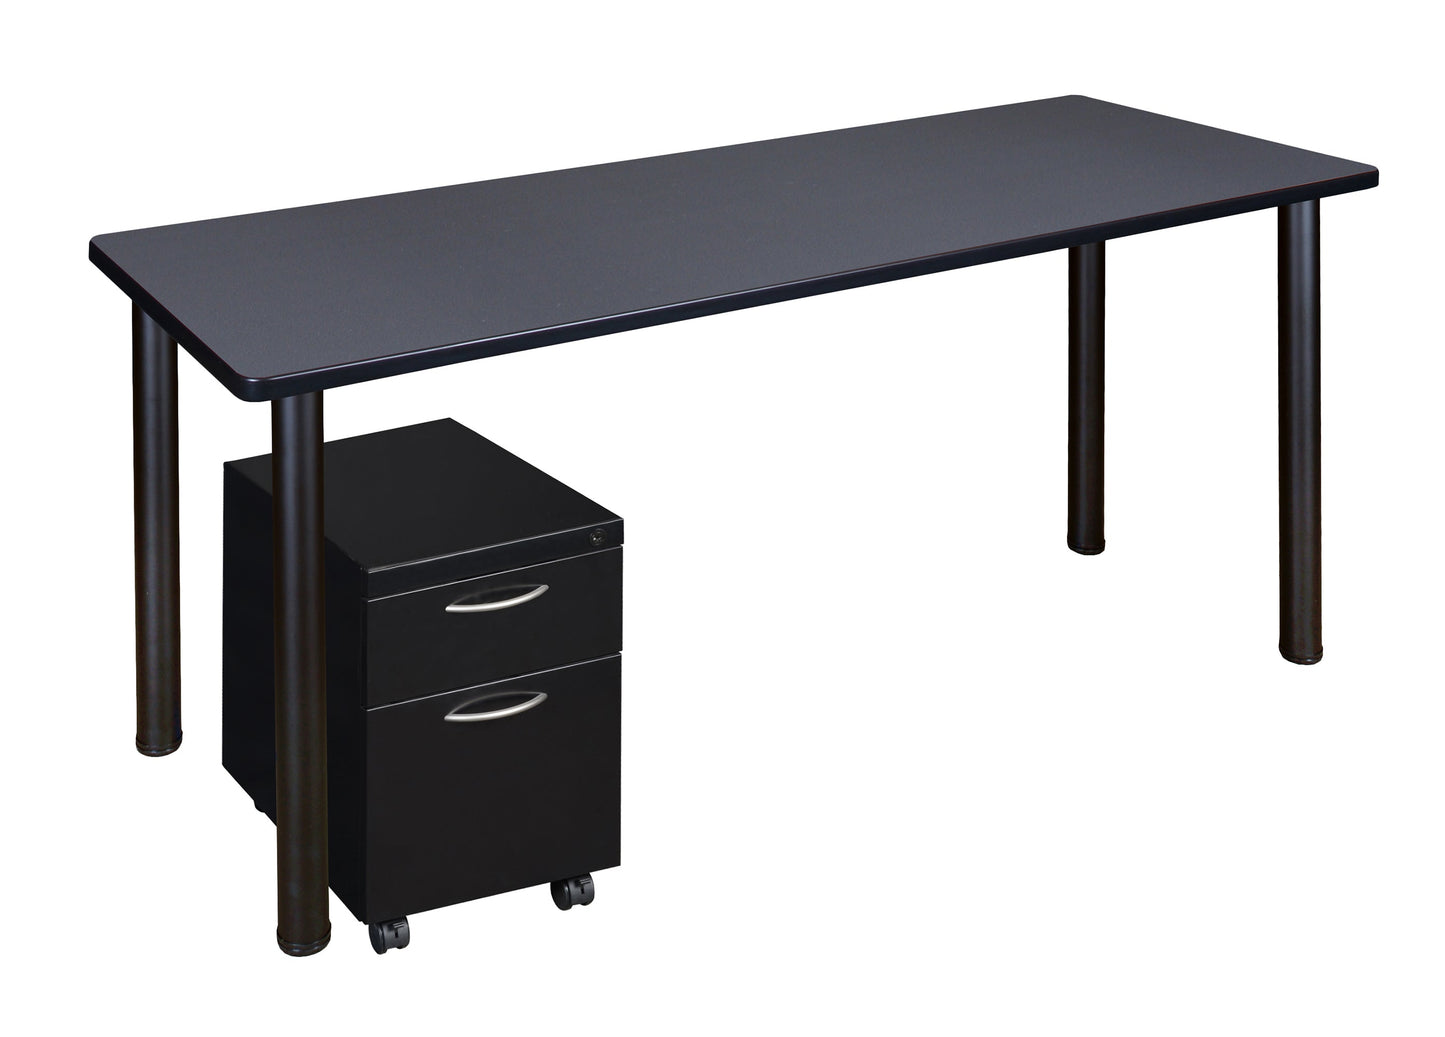 Regency Kee Office Desk Table with Mobile Pedestal Drawer (60"W x 24"D)